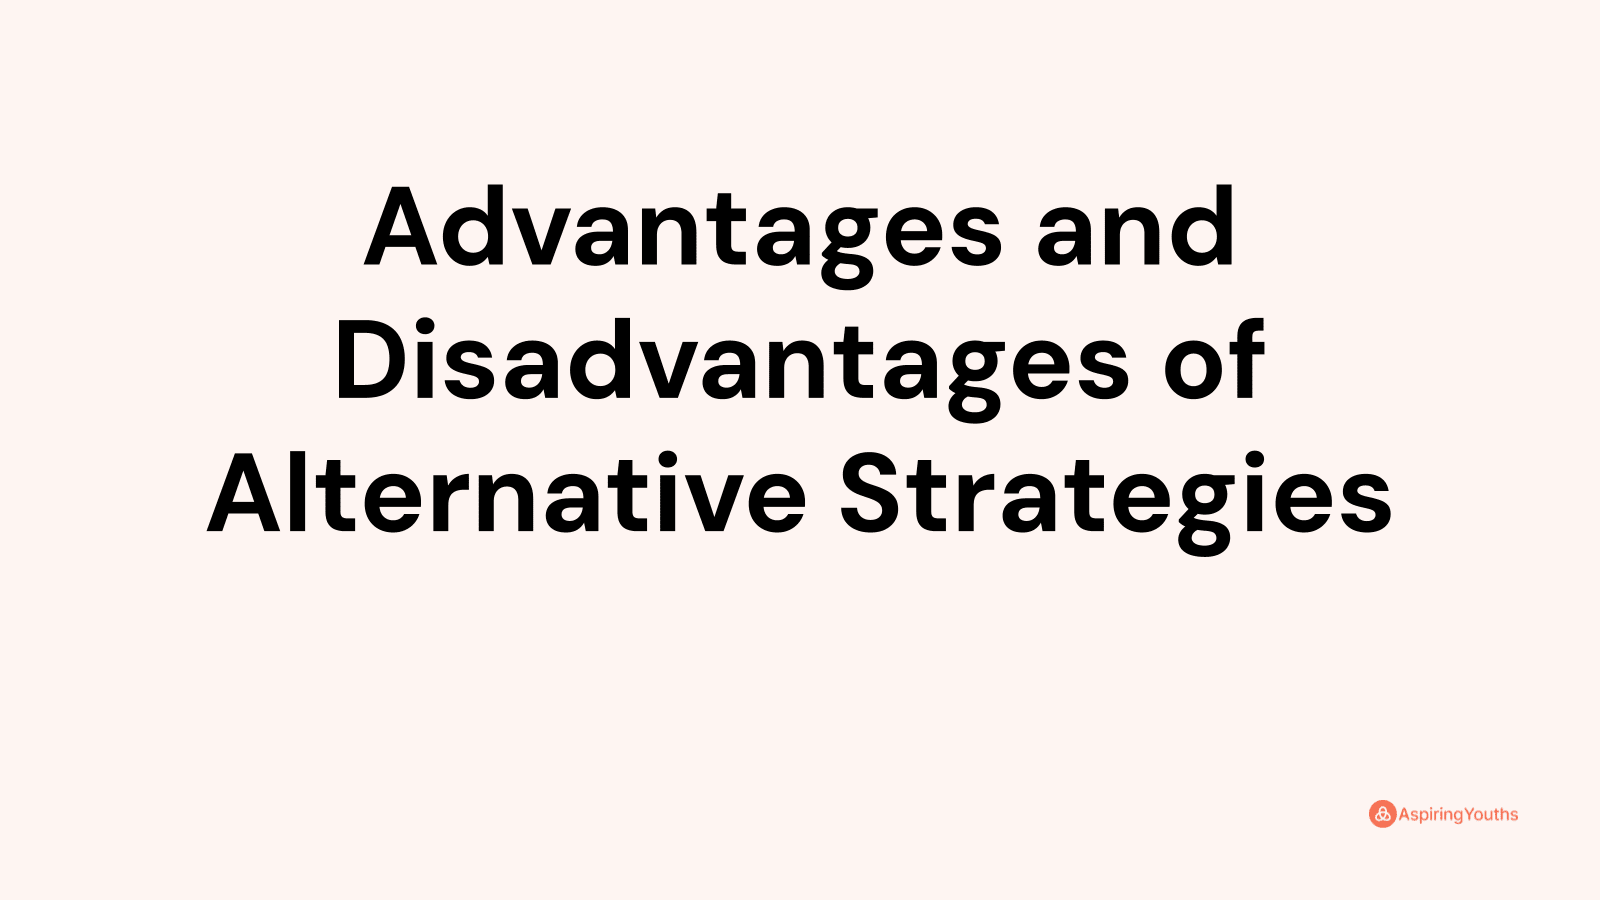 Advantages and disadvantages of Alternative Strategies